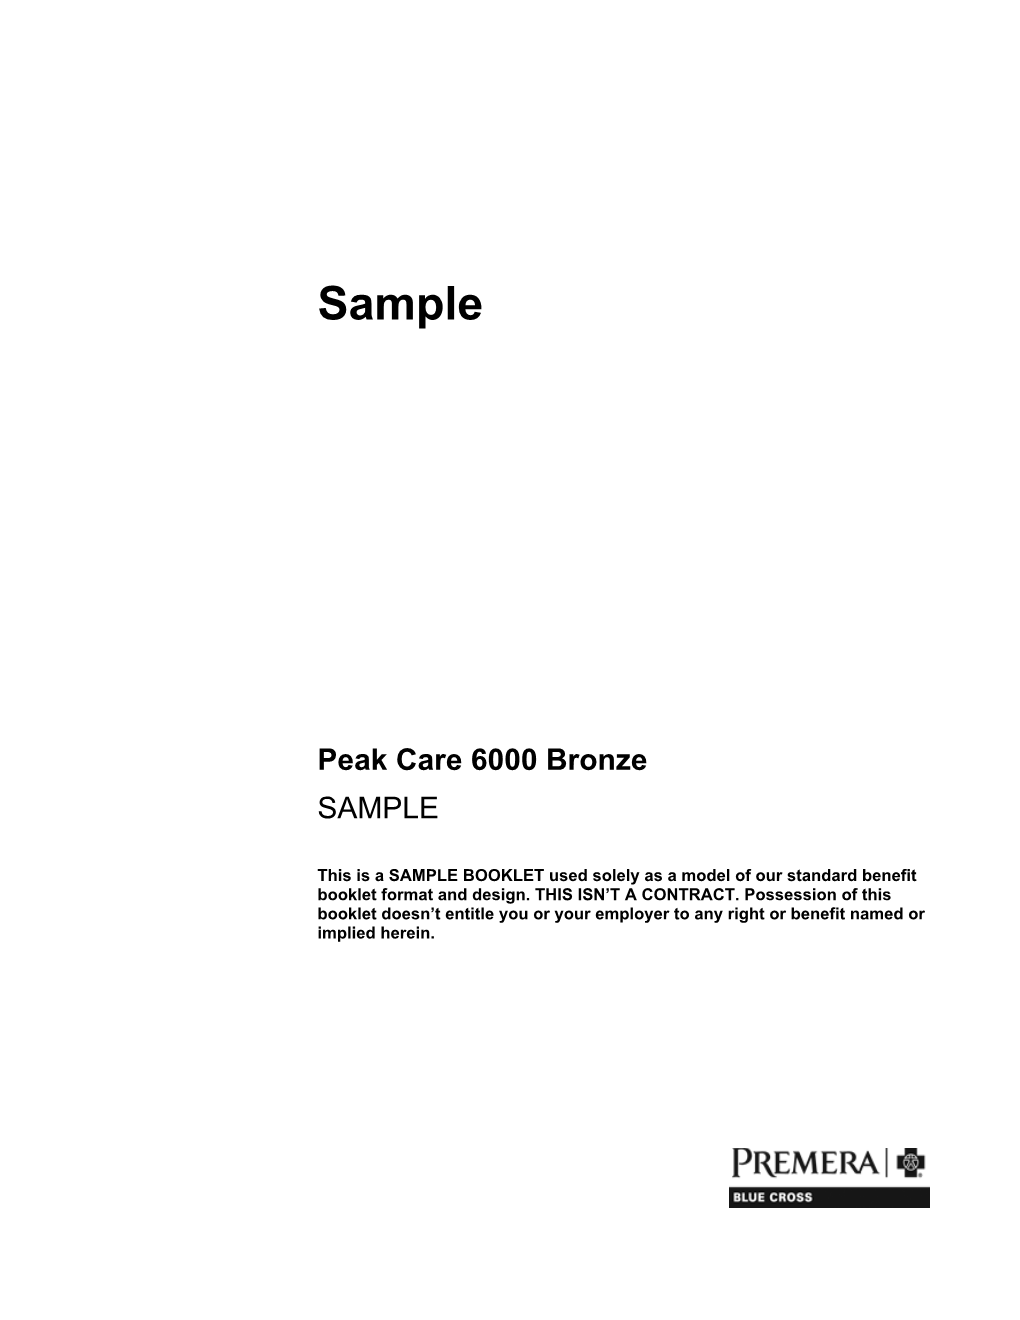 Premera Blue Cross Peak Care 6000 Bronze Benefit Booklet